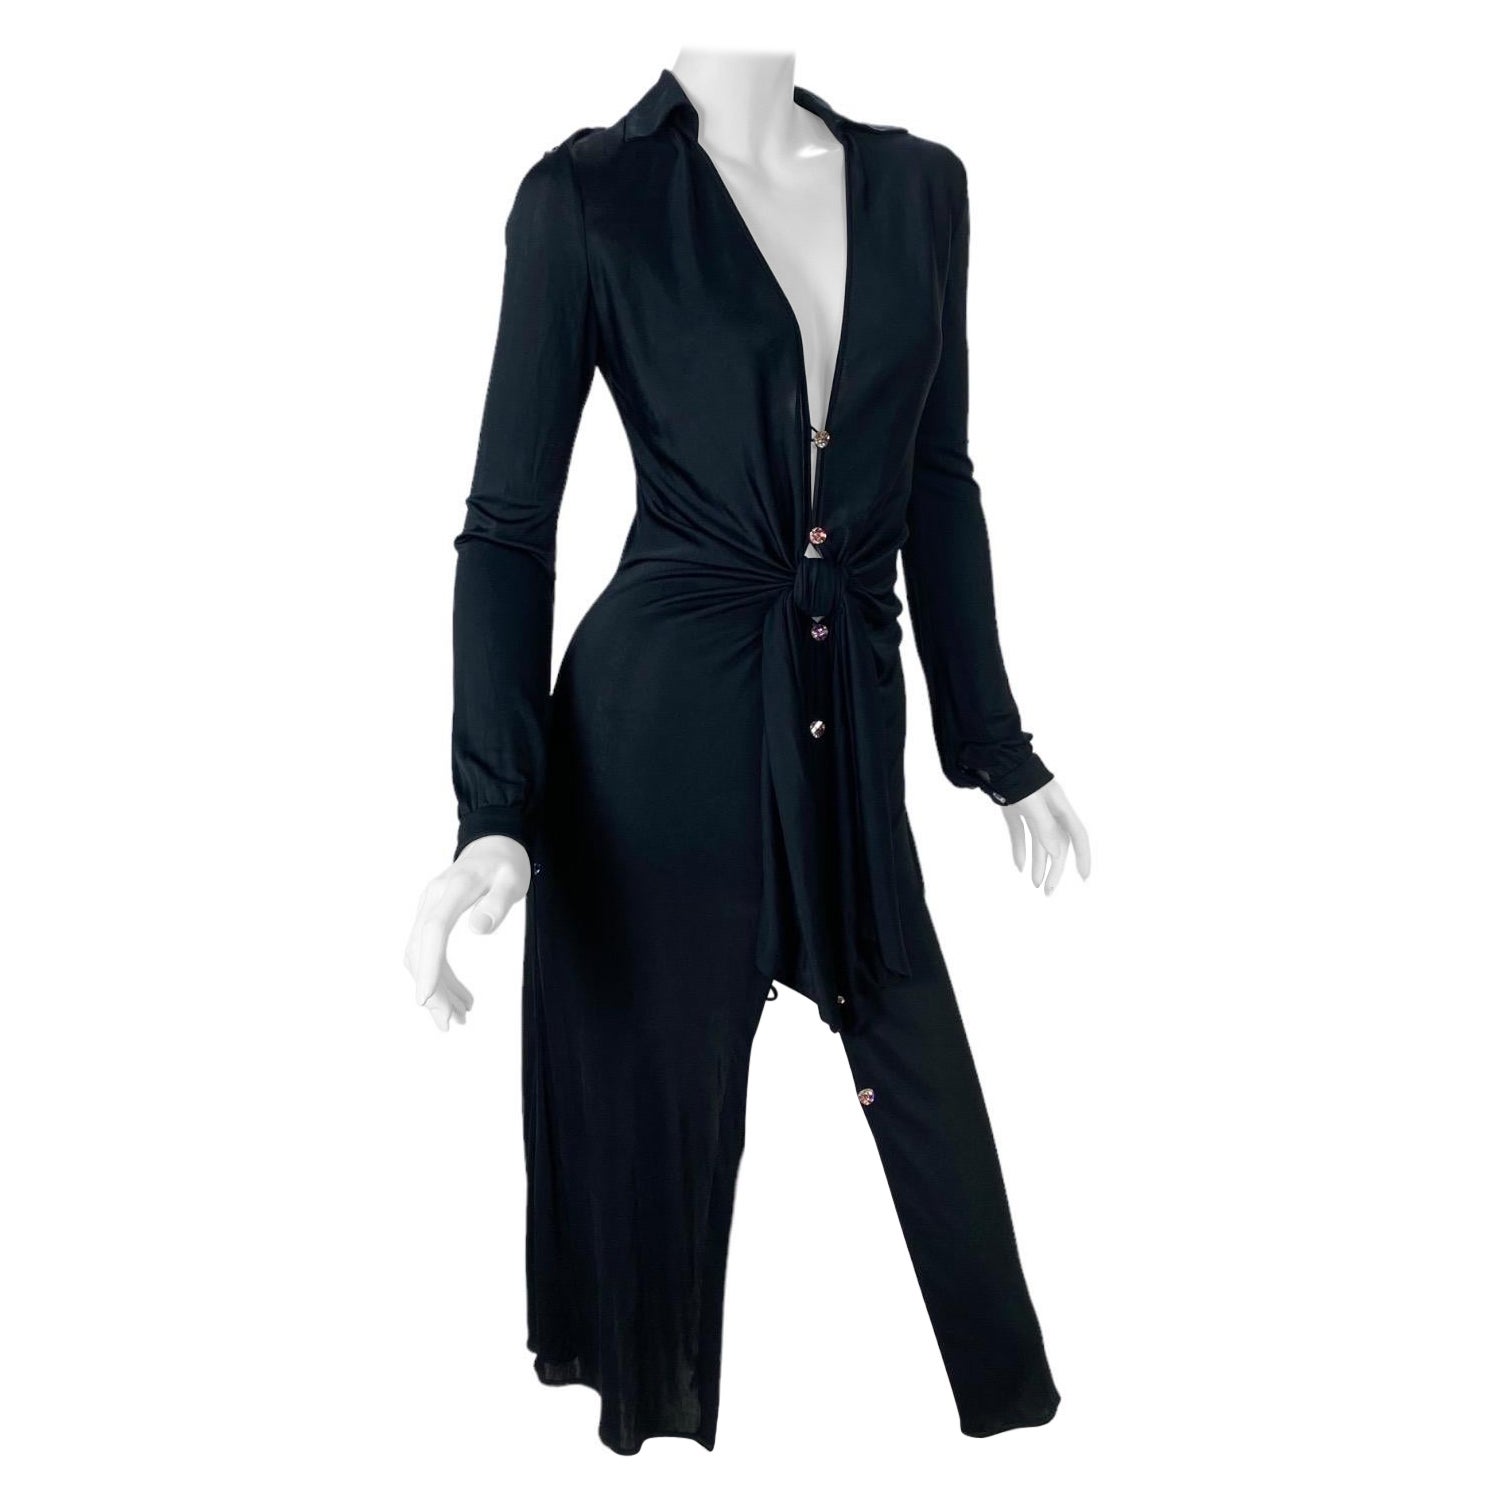 S/S 2000 Vintage Gianni Versace Couture Runway Black Deep V-Neck Dress For Sale